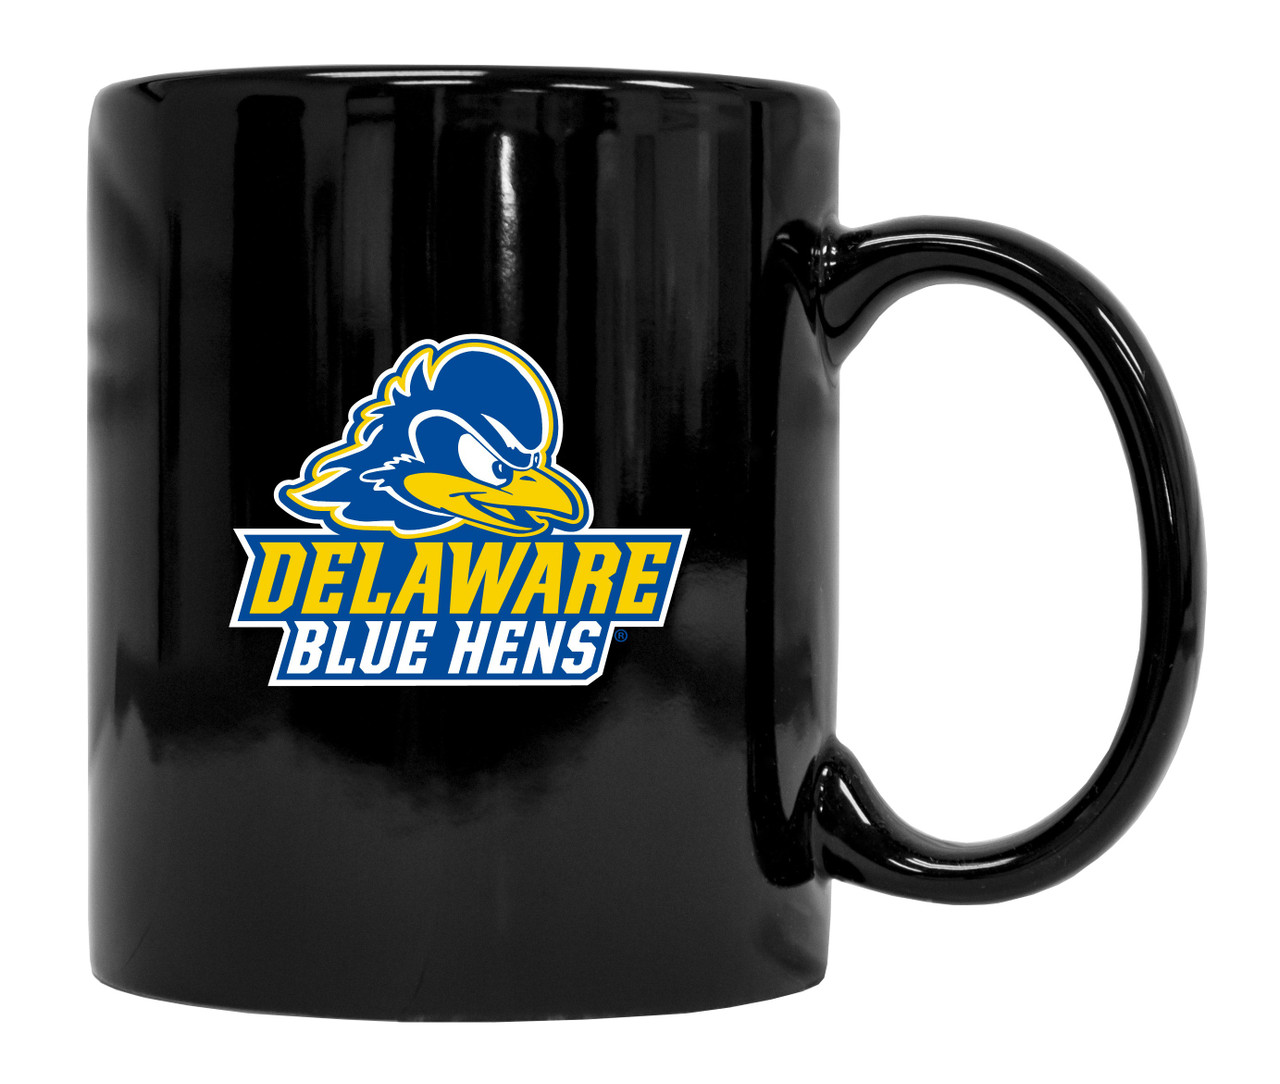 Delaware Blue Hens Black Ceramic Mug 2-Pack (Black).